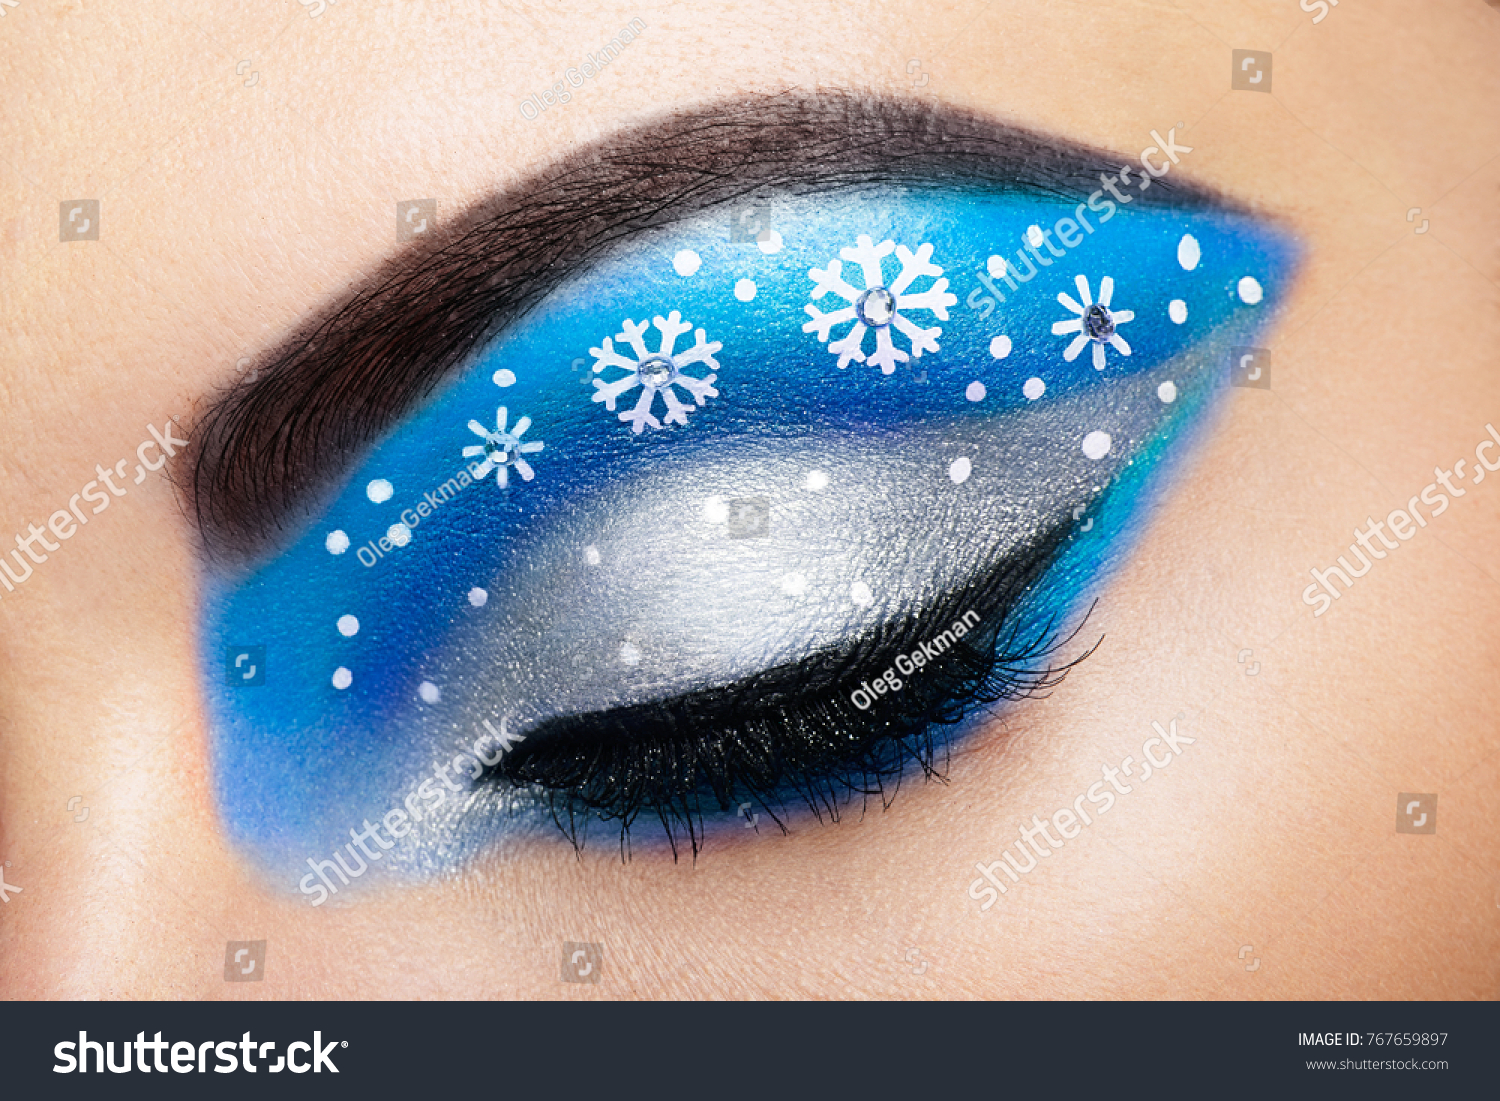 Макияж Снегурочки со снежинками